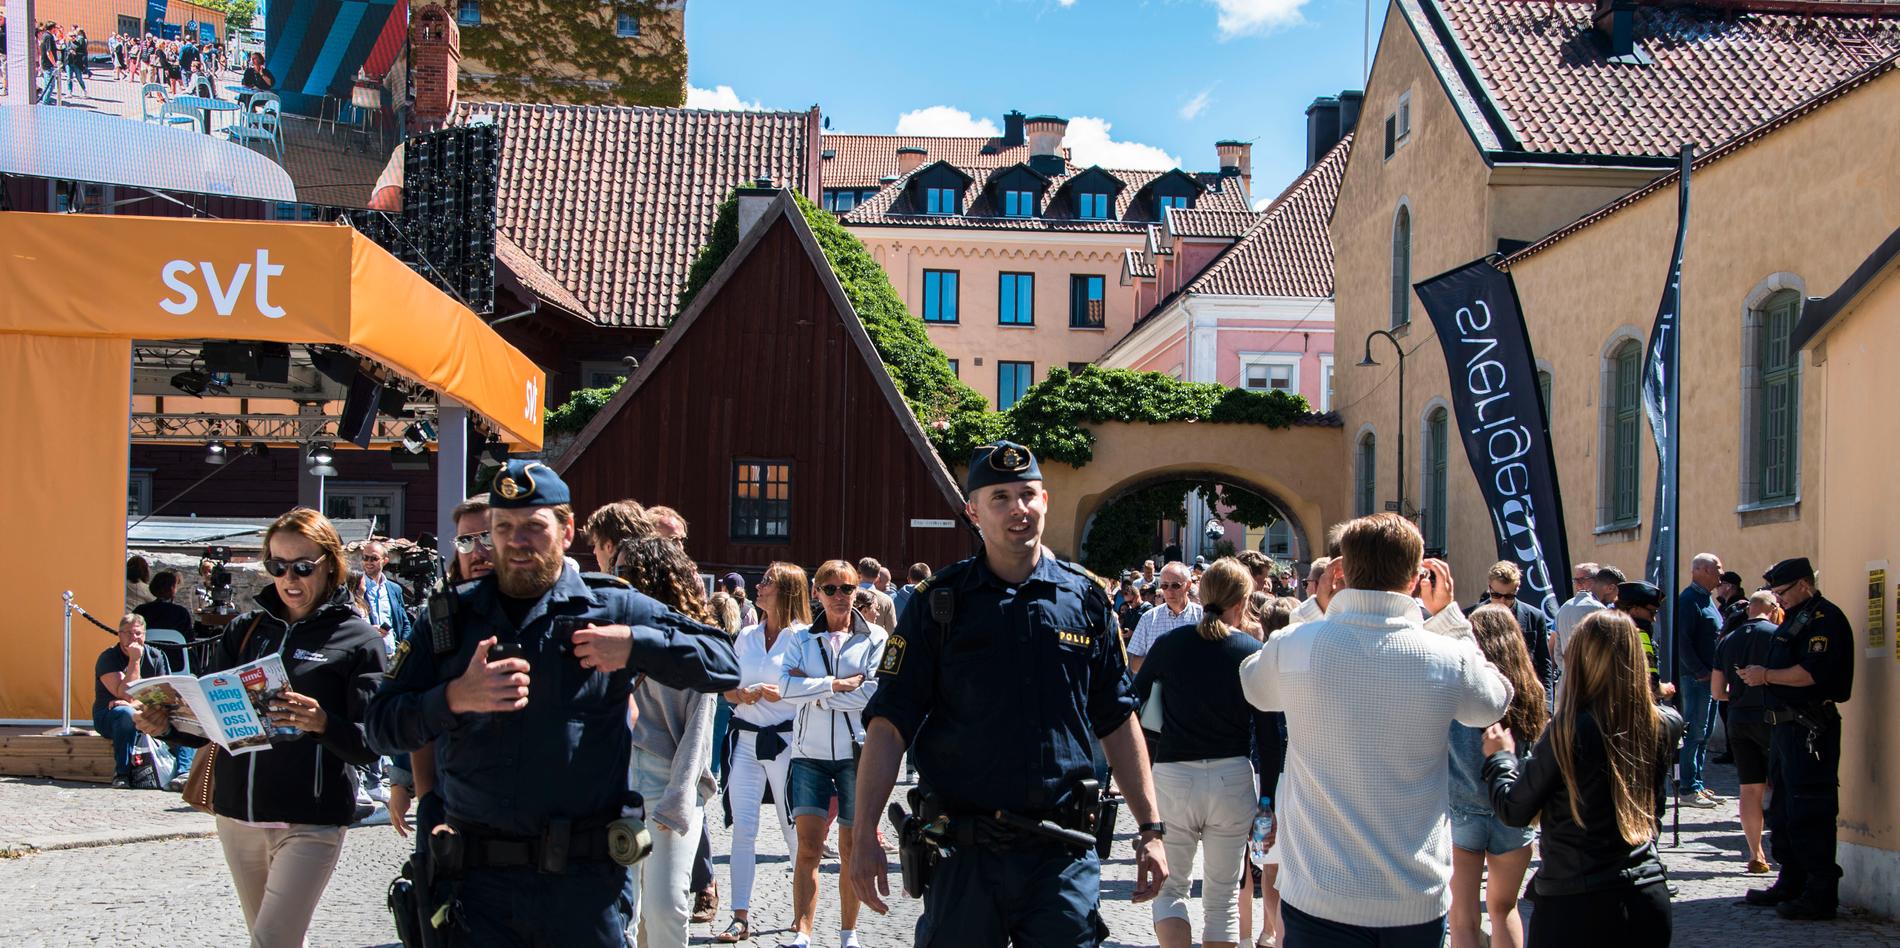 Polisens agerande under politikveckan i Almedalen borde utredas av en kriskommission.